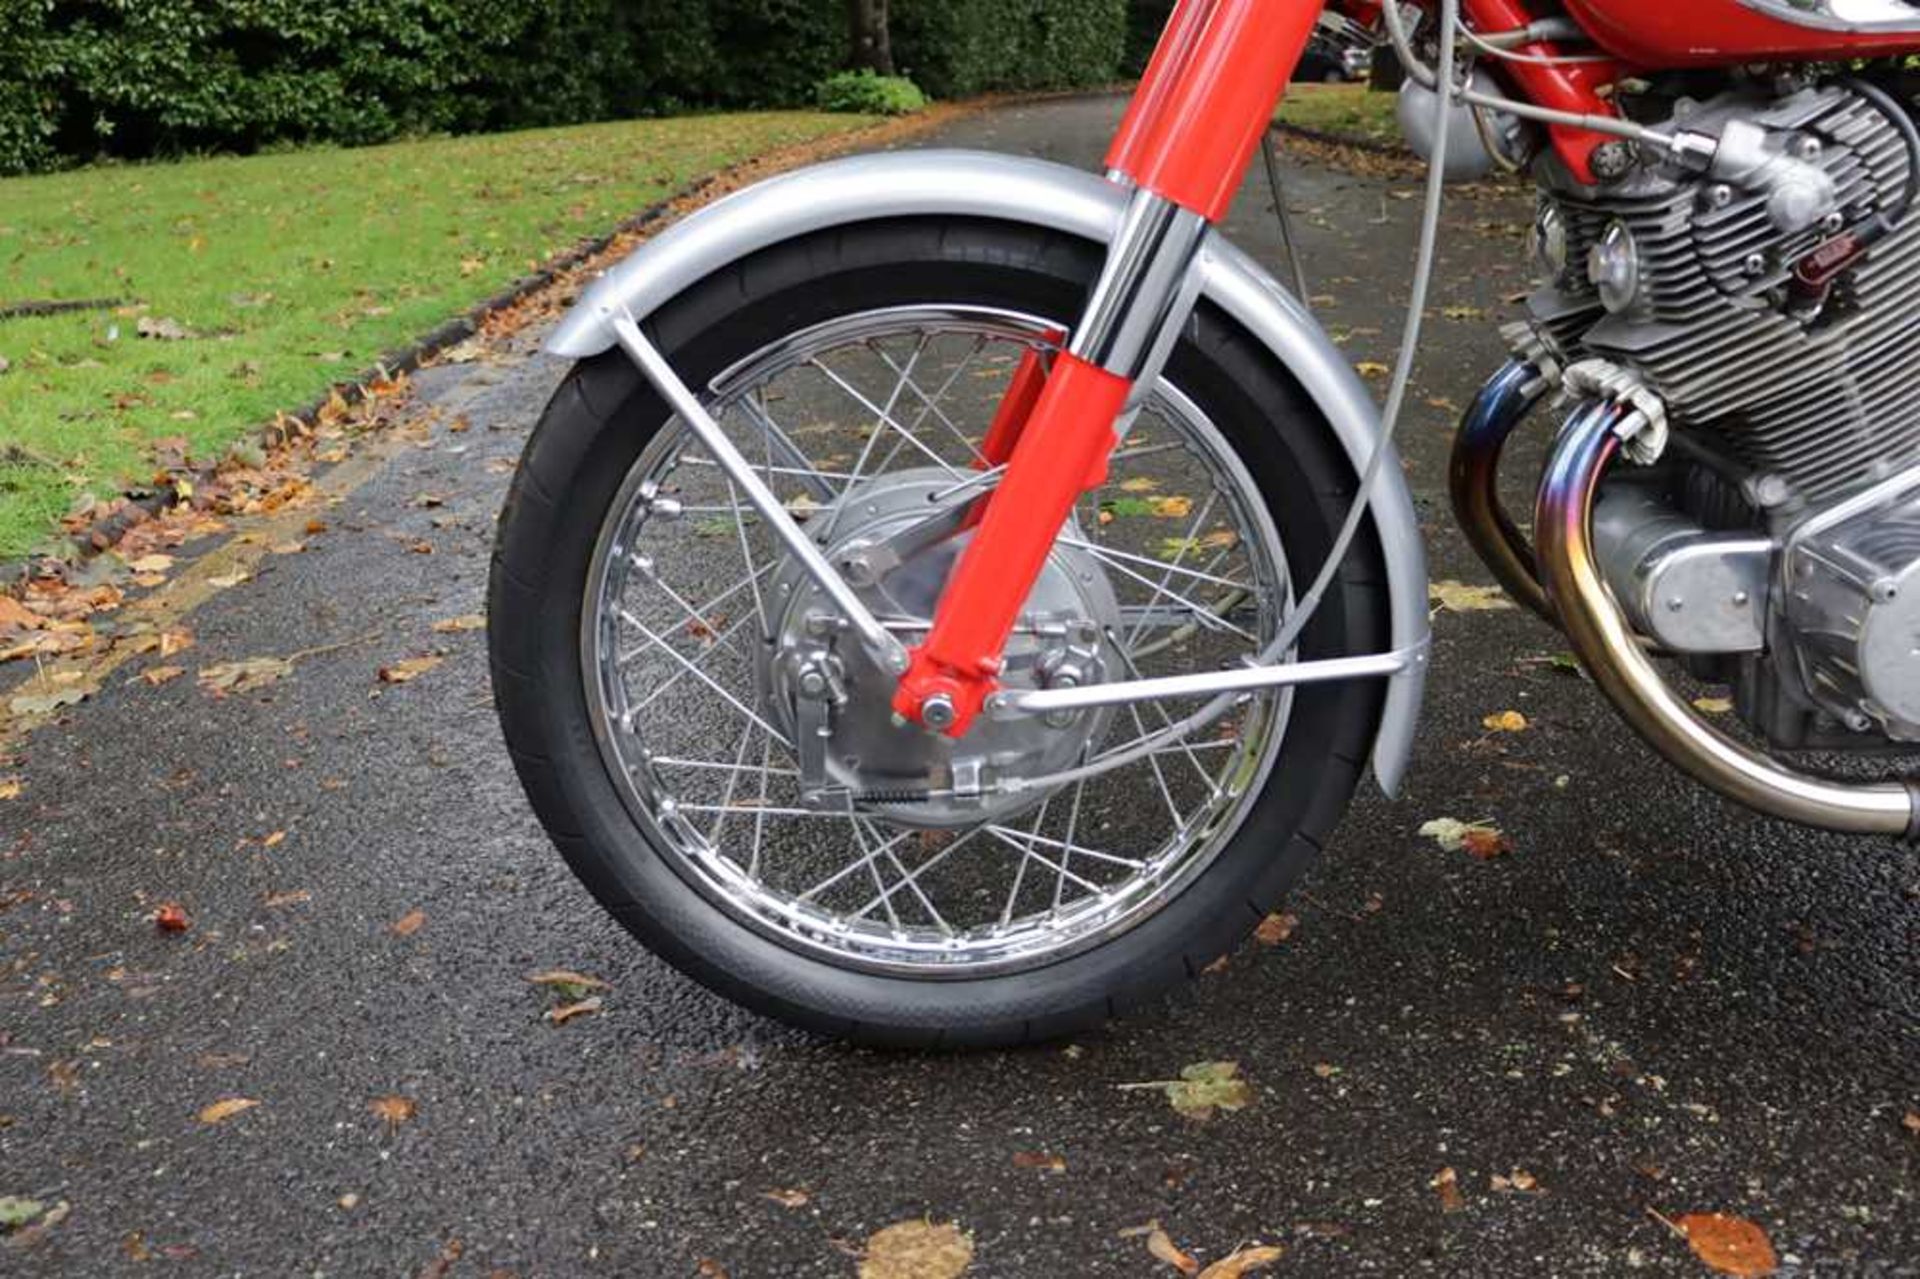 1966 Honda CB77 Restored to a high standard - Image 41 of 65